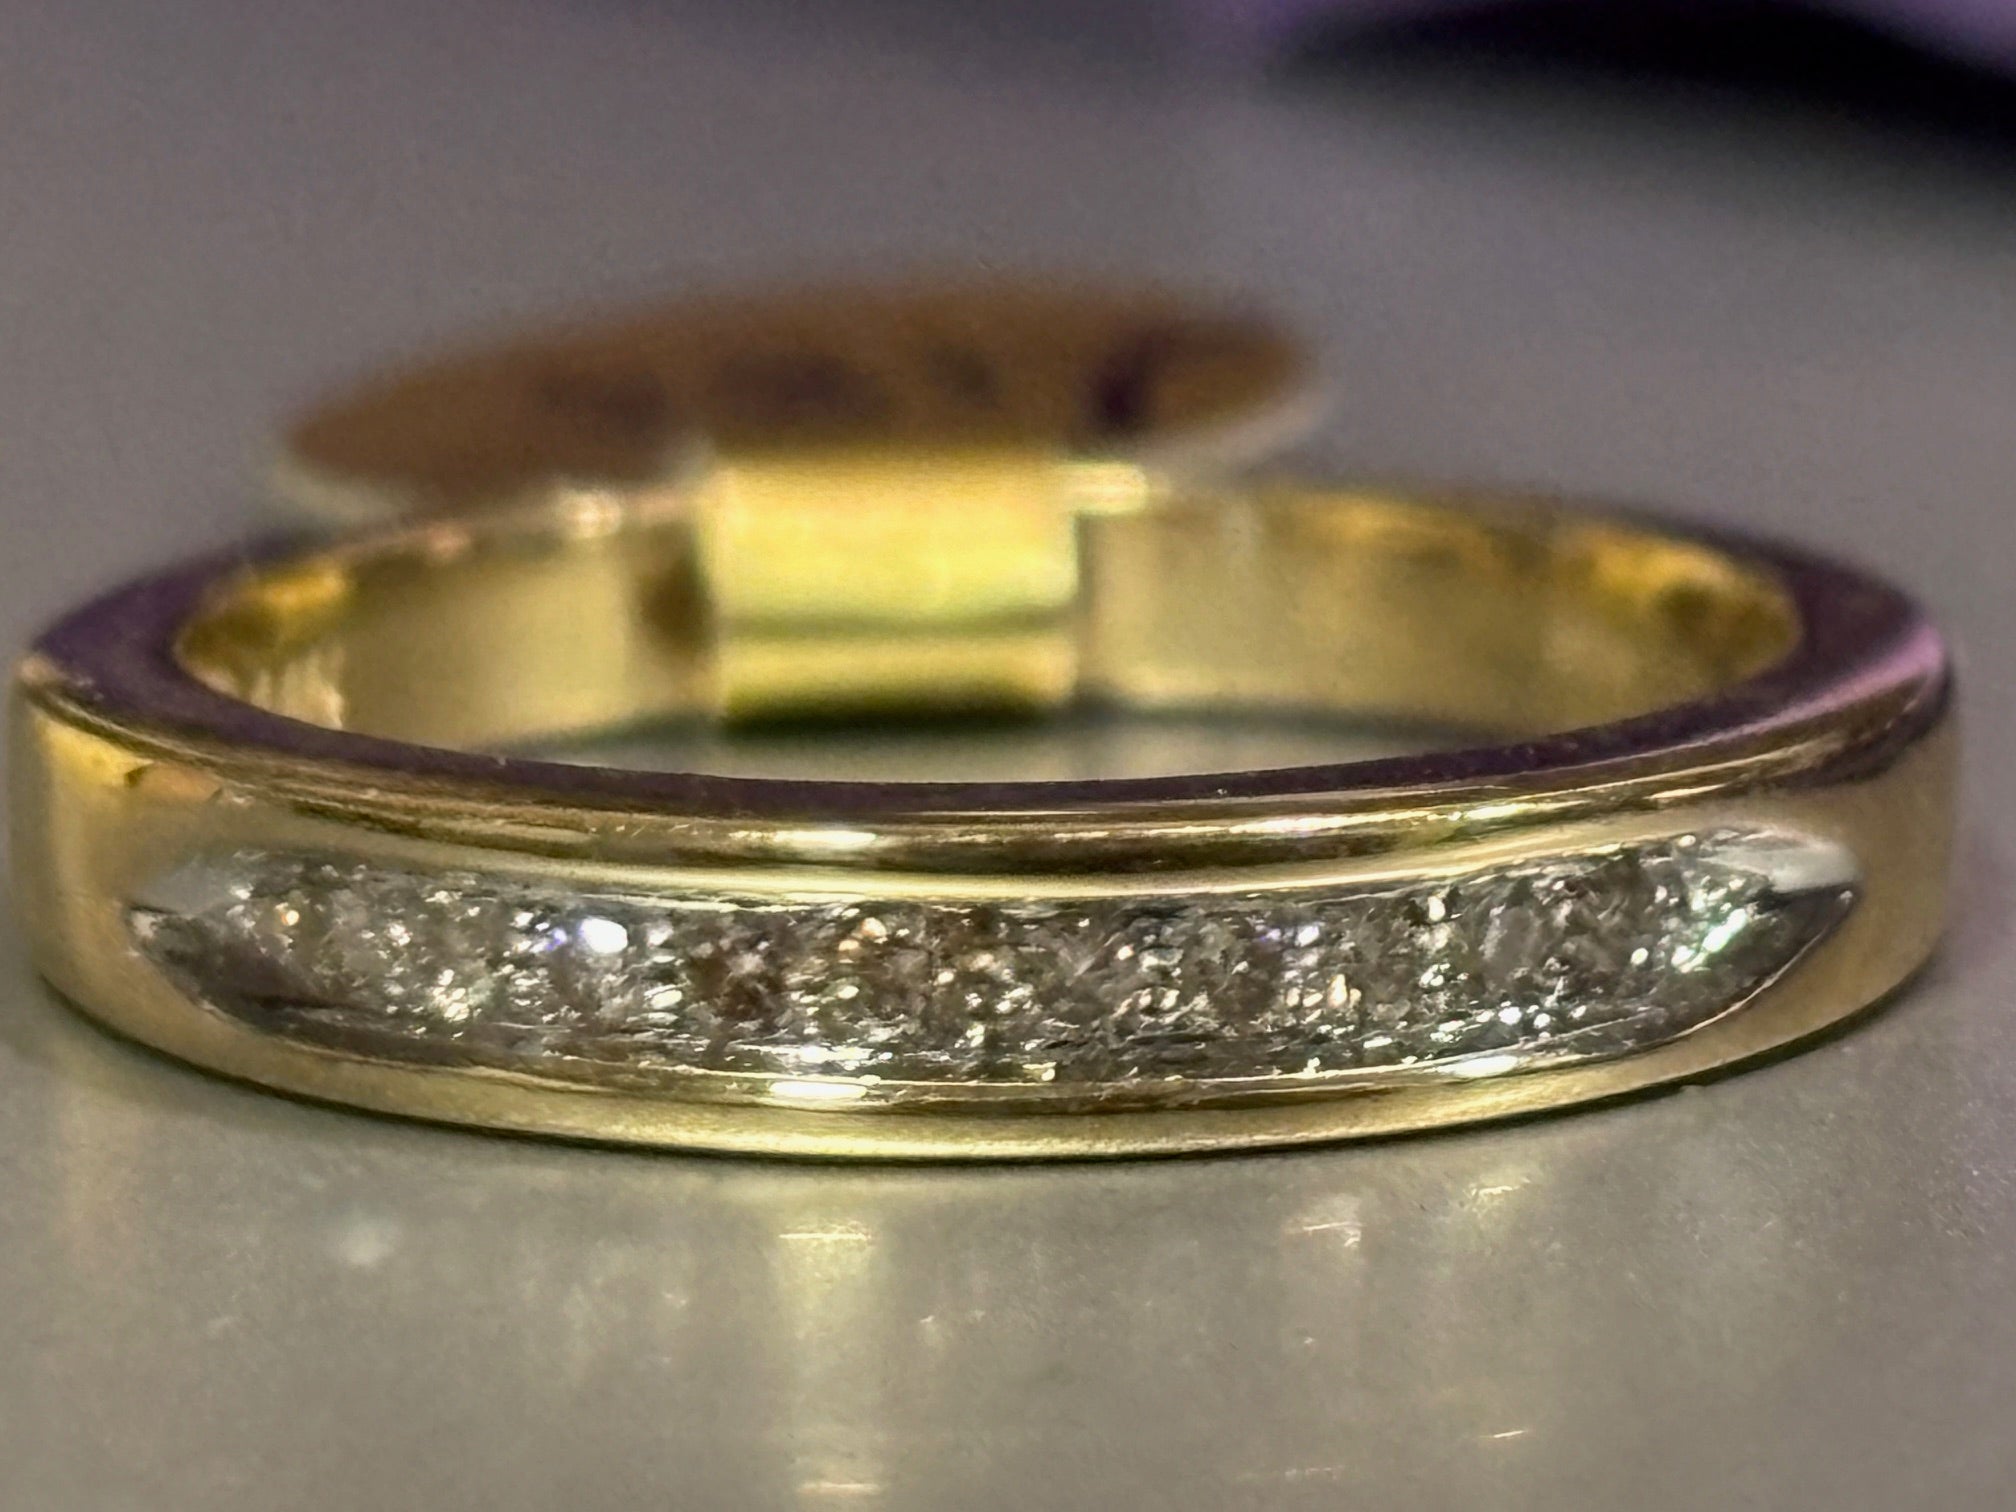 Diamond Half Eternity Ring